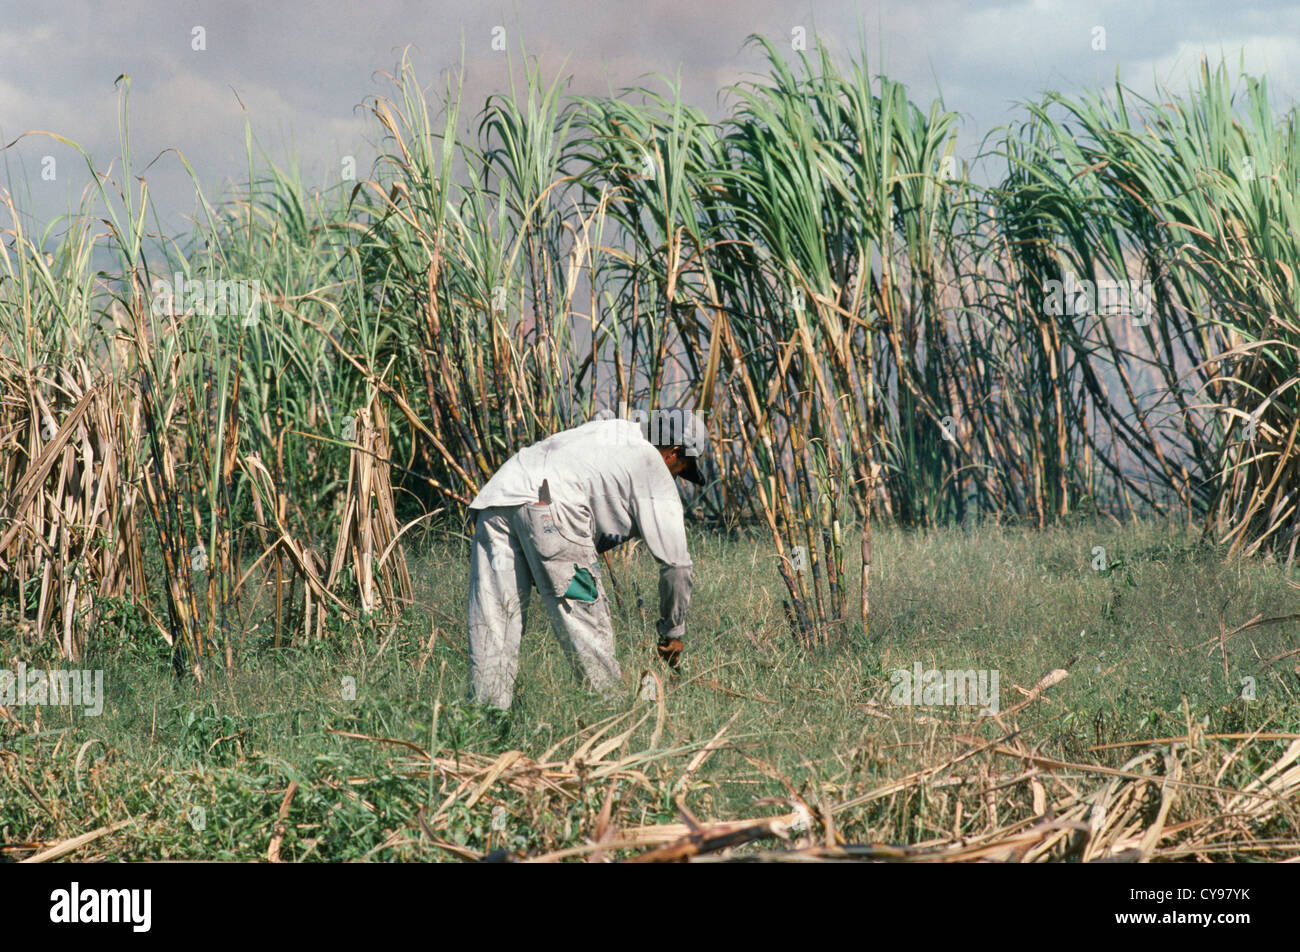 South America, Brazil, Amazonia, Saccharum officinarum, Sugar cane plantation harvest. Stock Photo